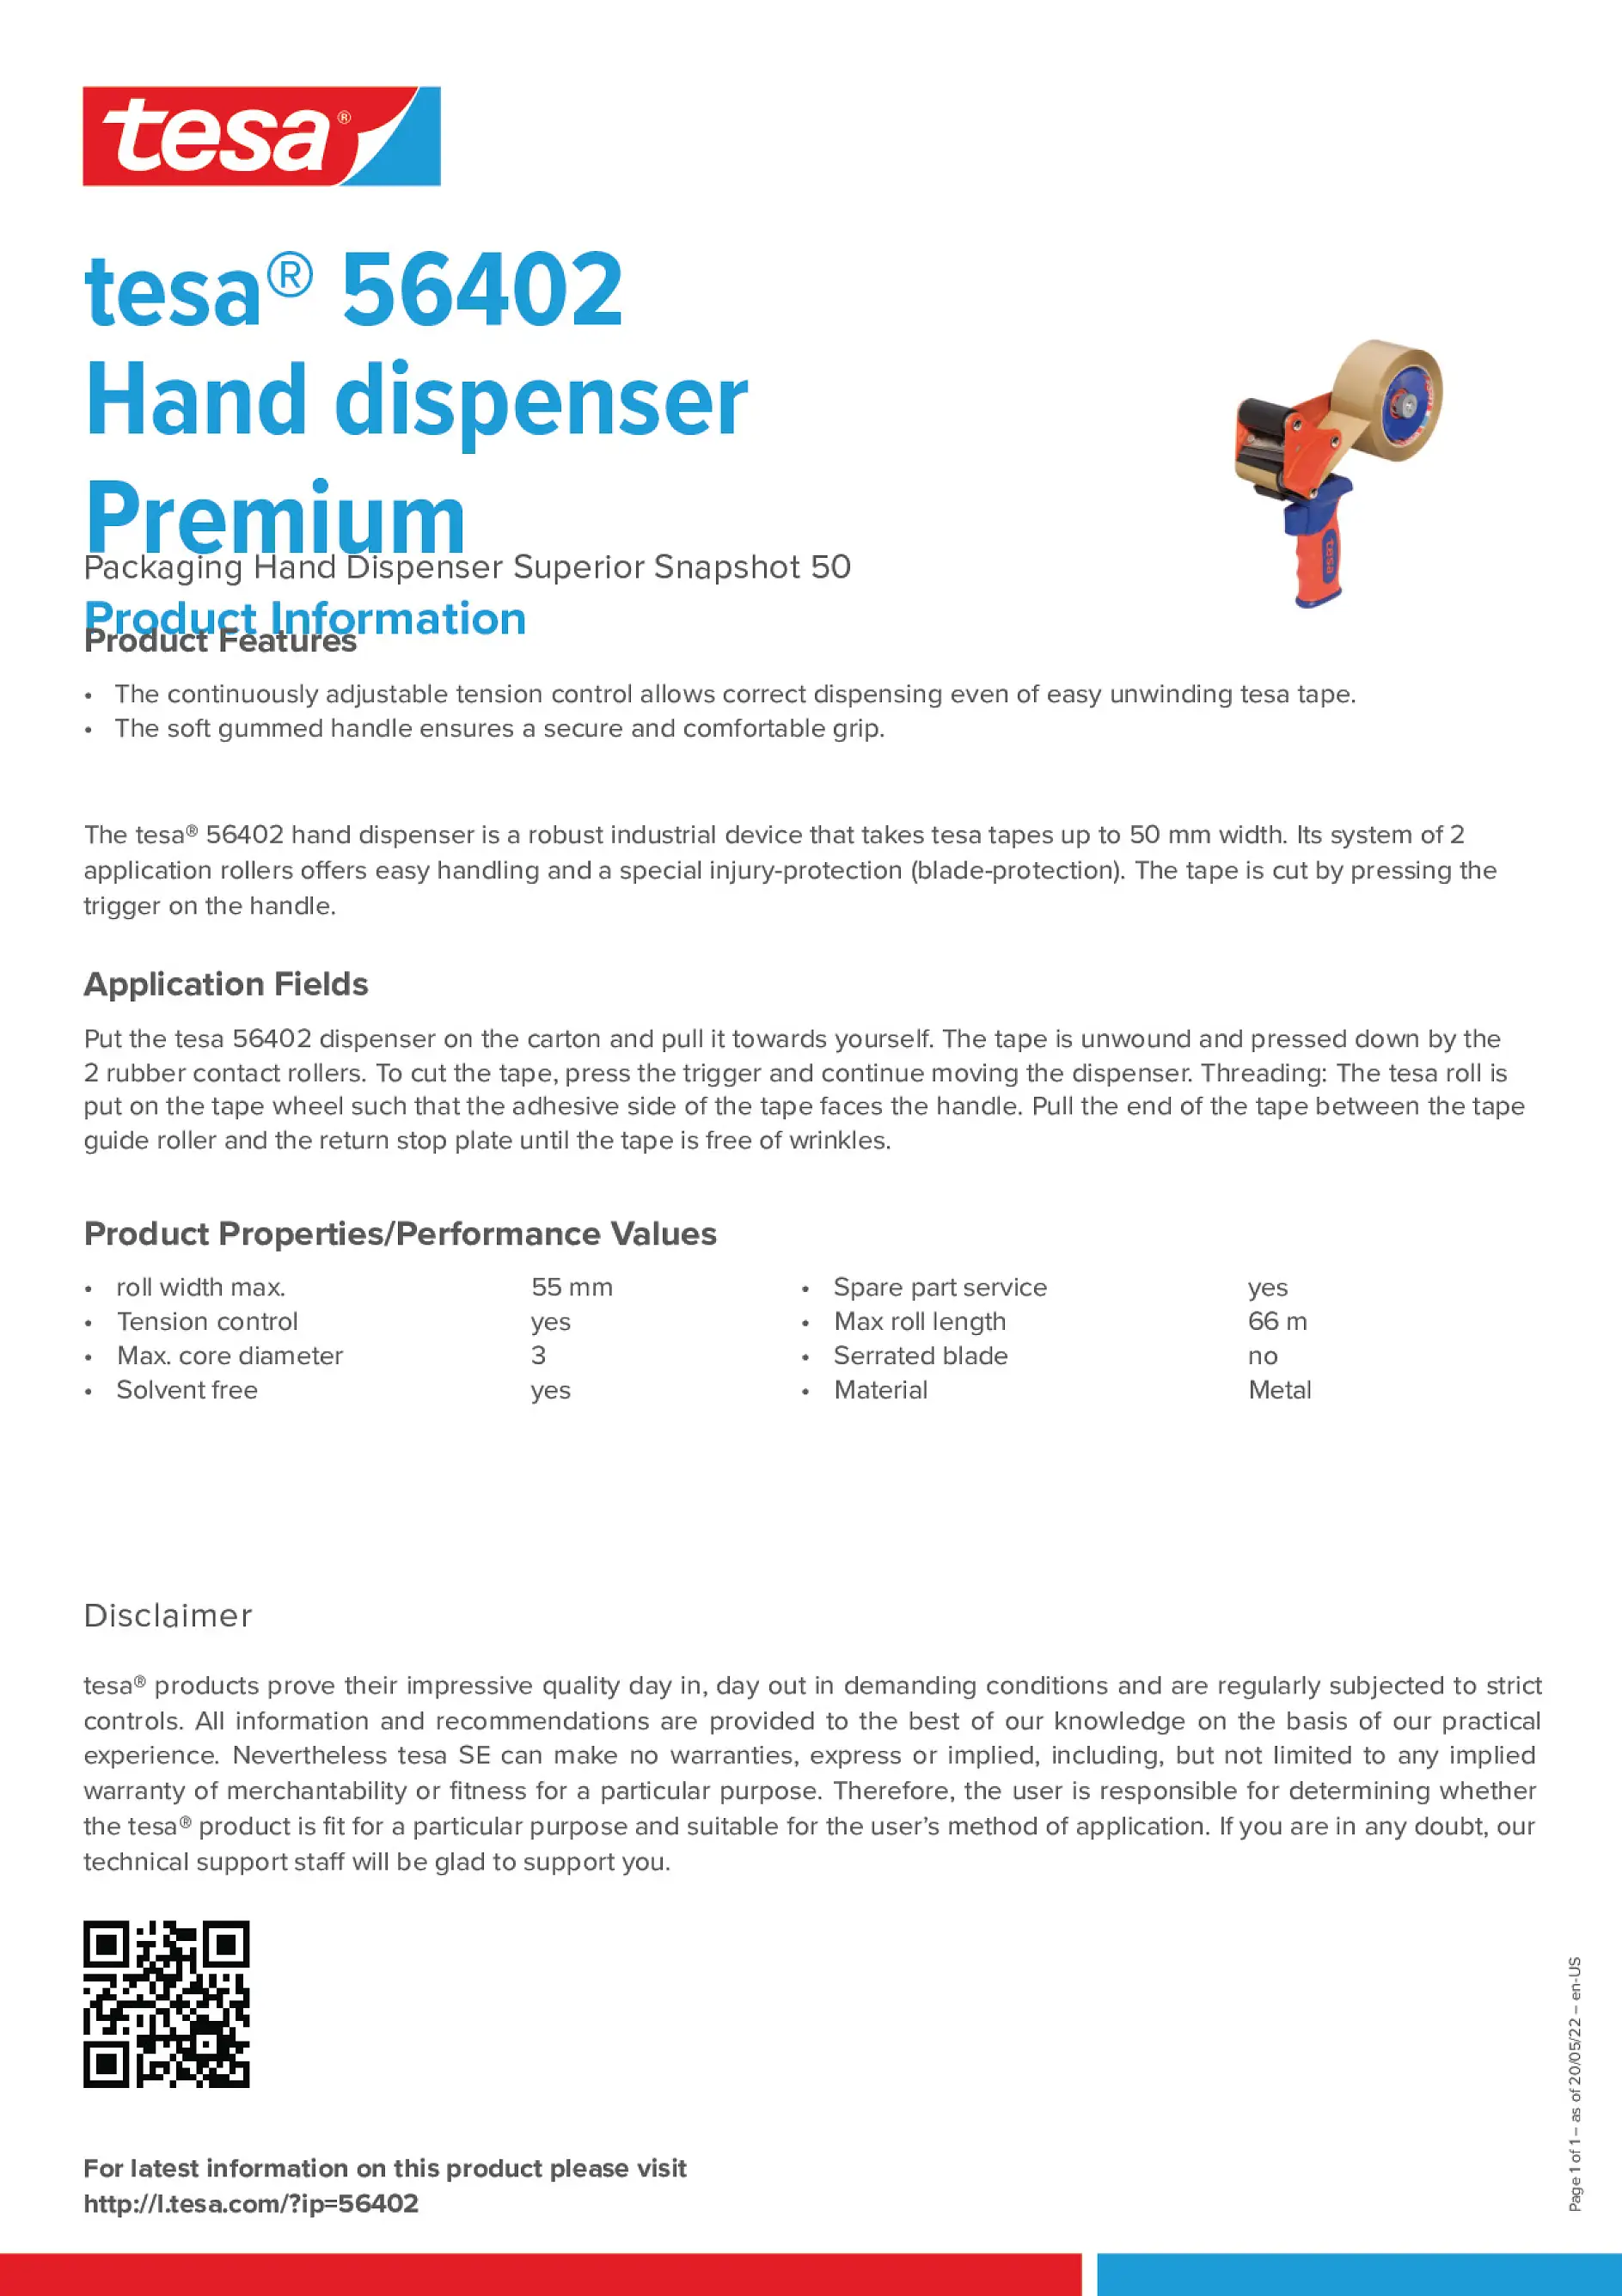 tesa_56402_Hand_dispenser_Premium_en-US